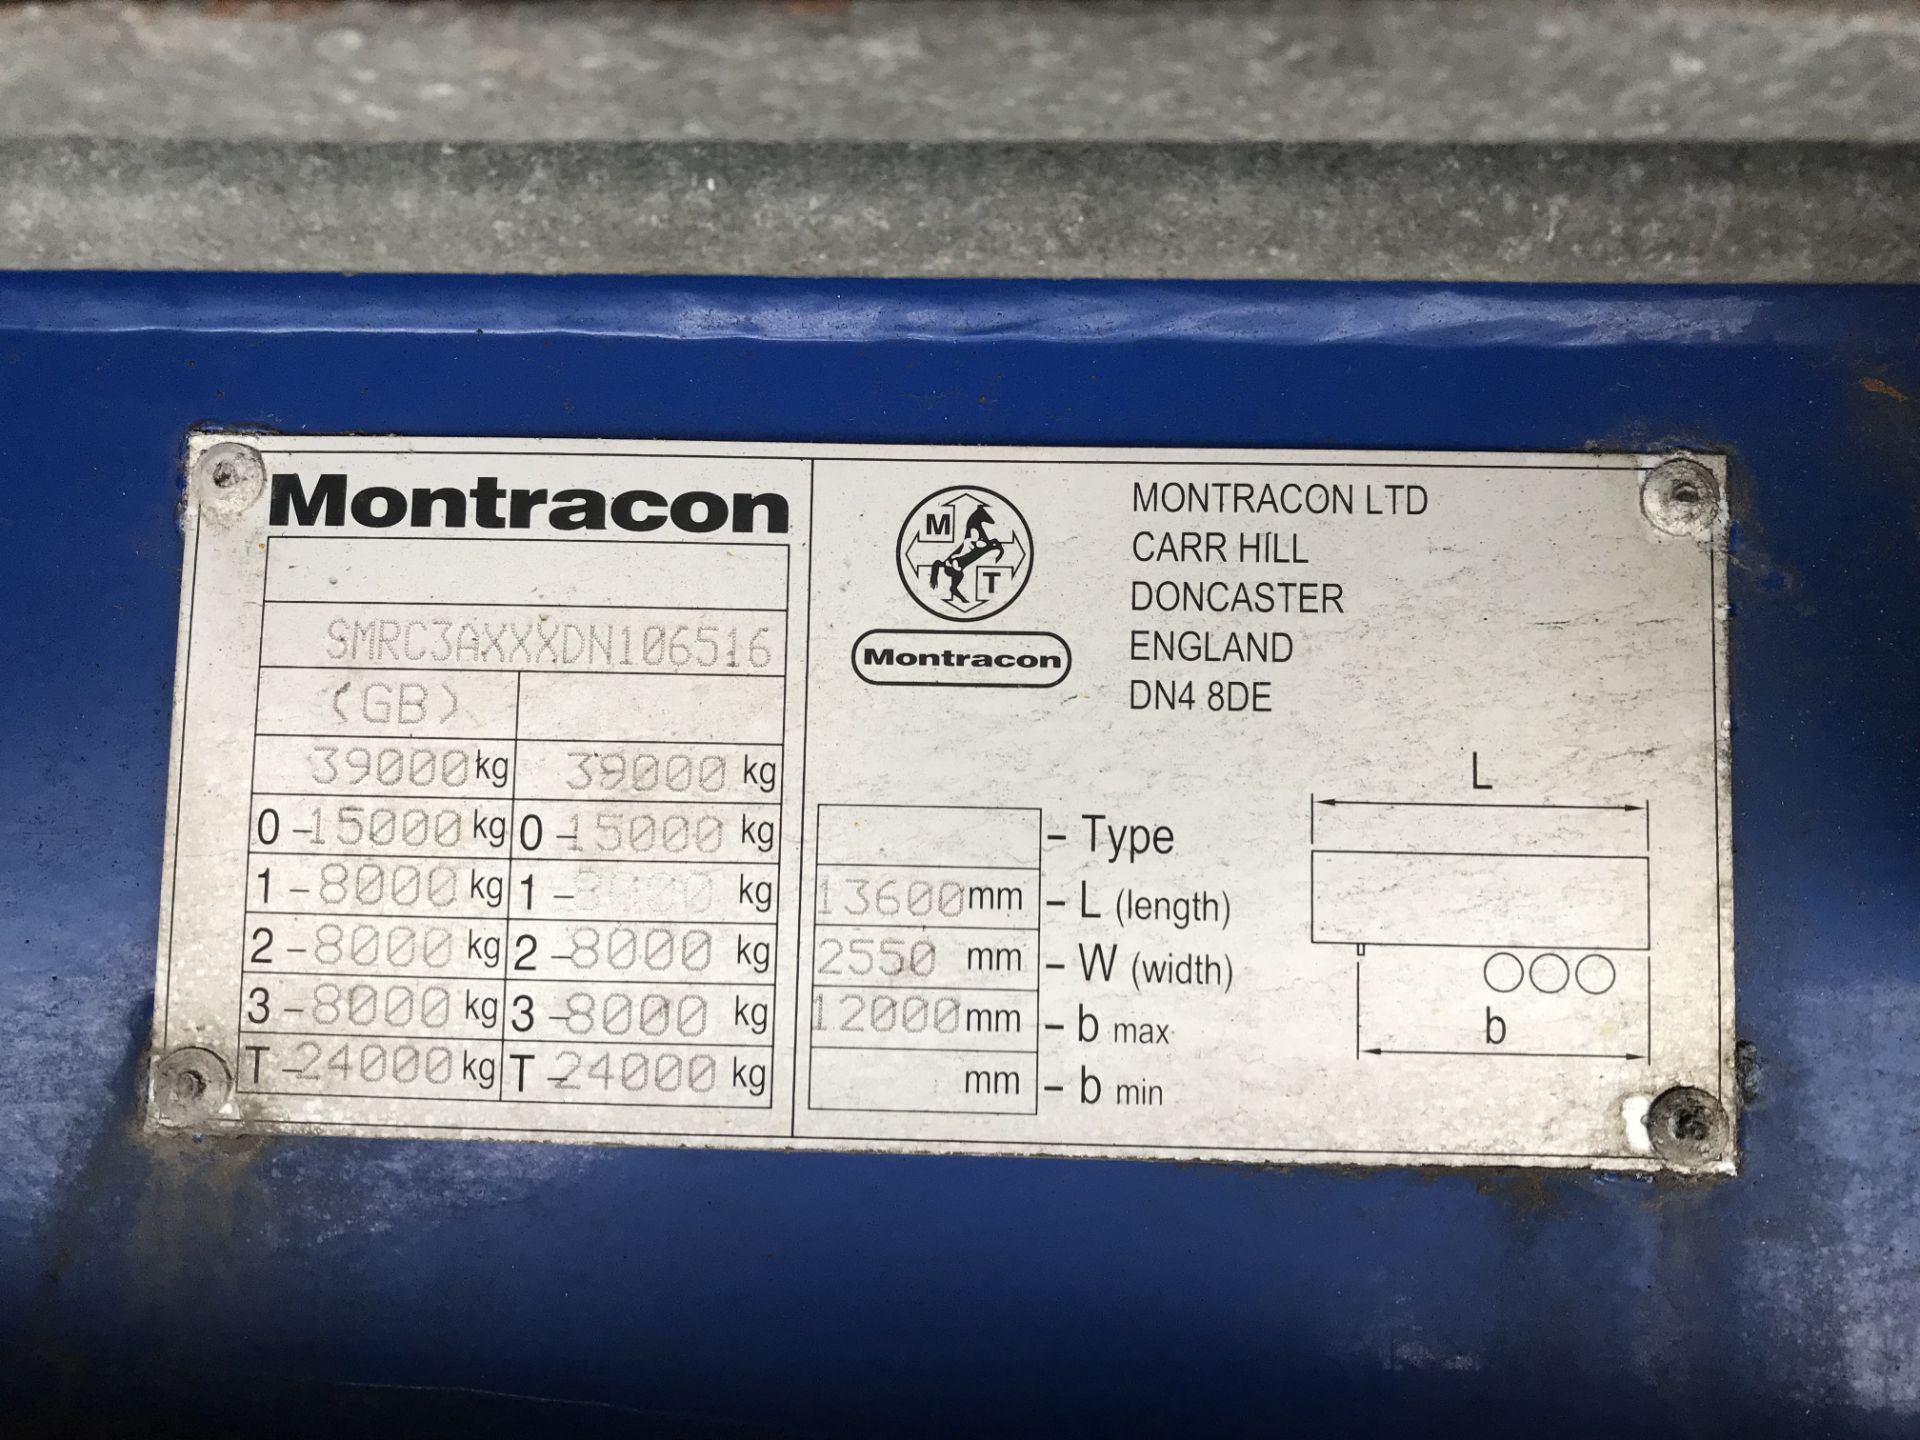 Montracon 13.6m Tri-Axle Curtainside Single Deck Semi-Trailer, chassis no. SMRC3AXXXDN106516, ID no. - Image 6 of 6